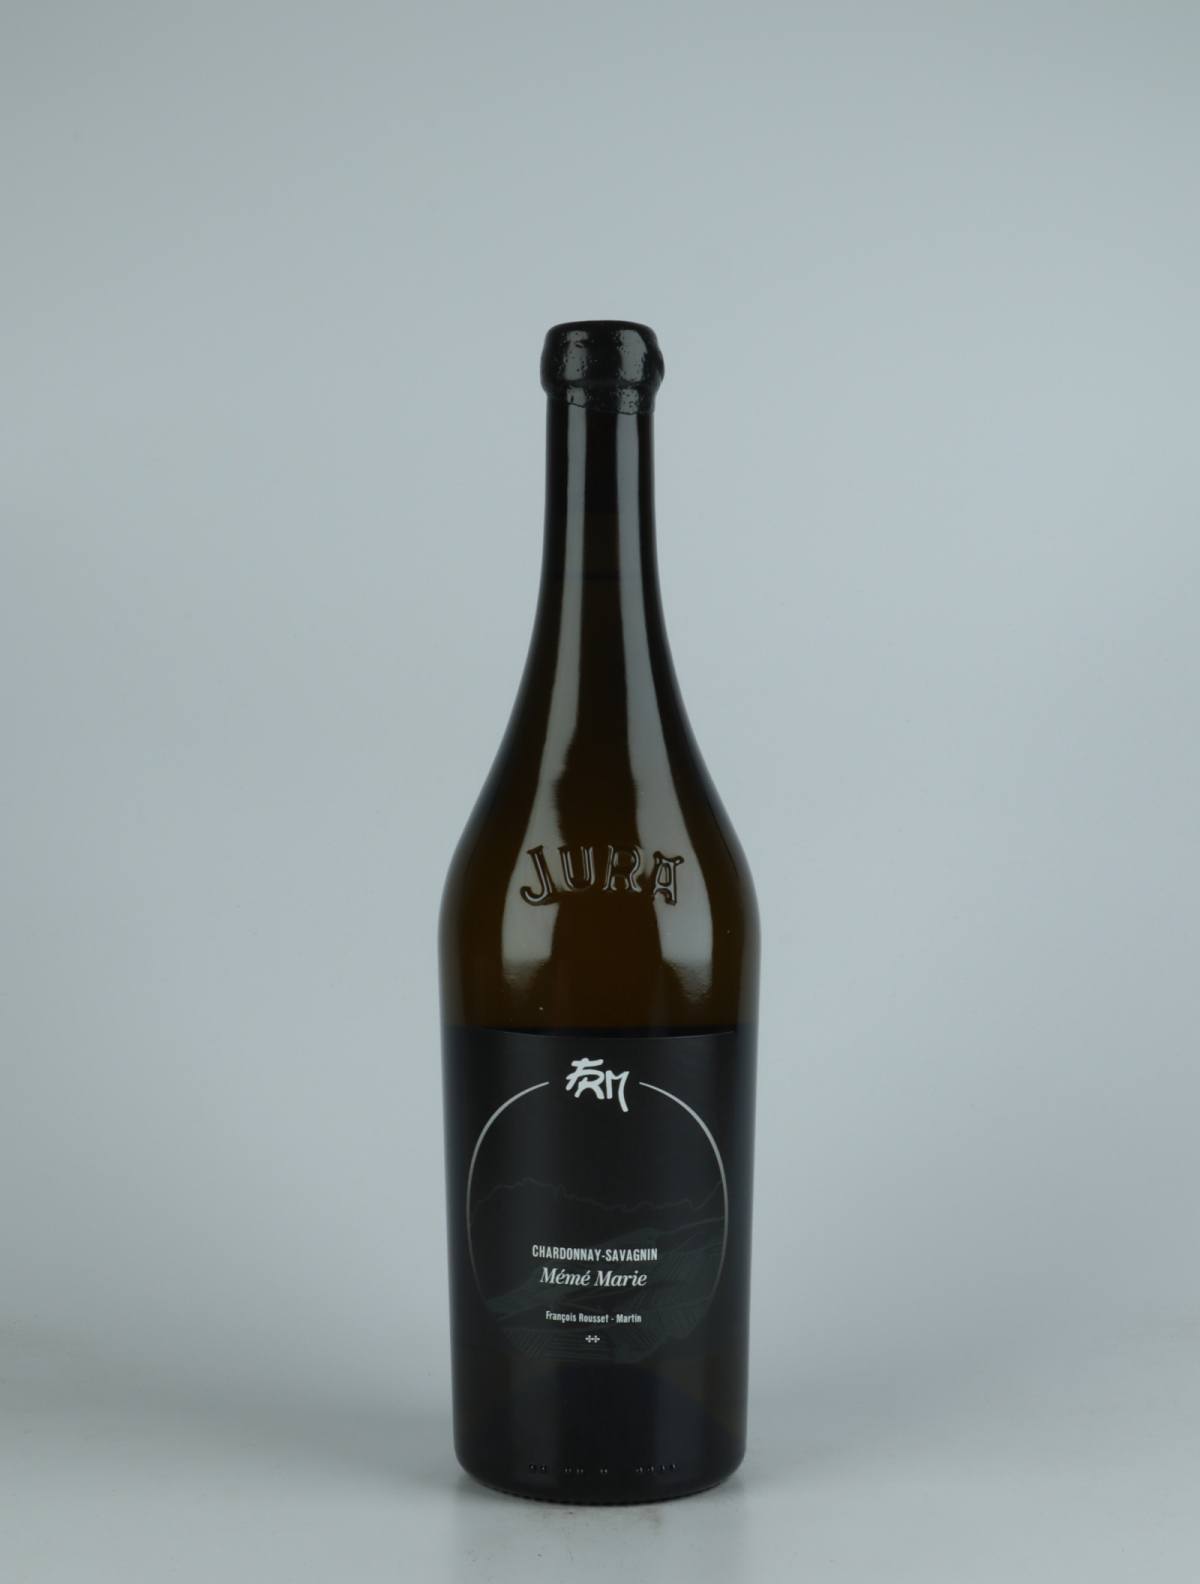 A bottle 2018 Cuvée Mémée Marie White wine from François Rousset-Martin, Jura in France